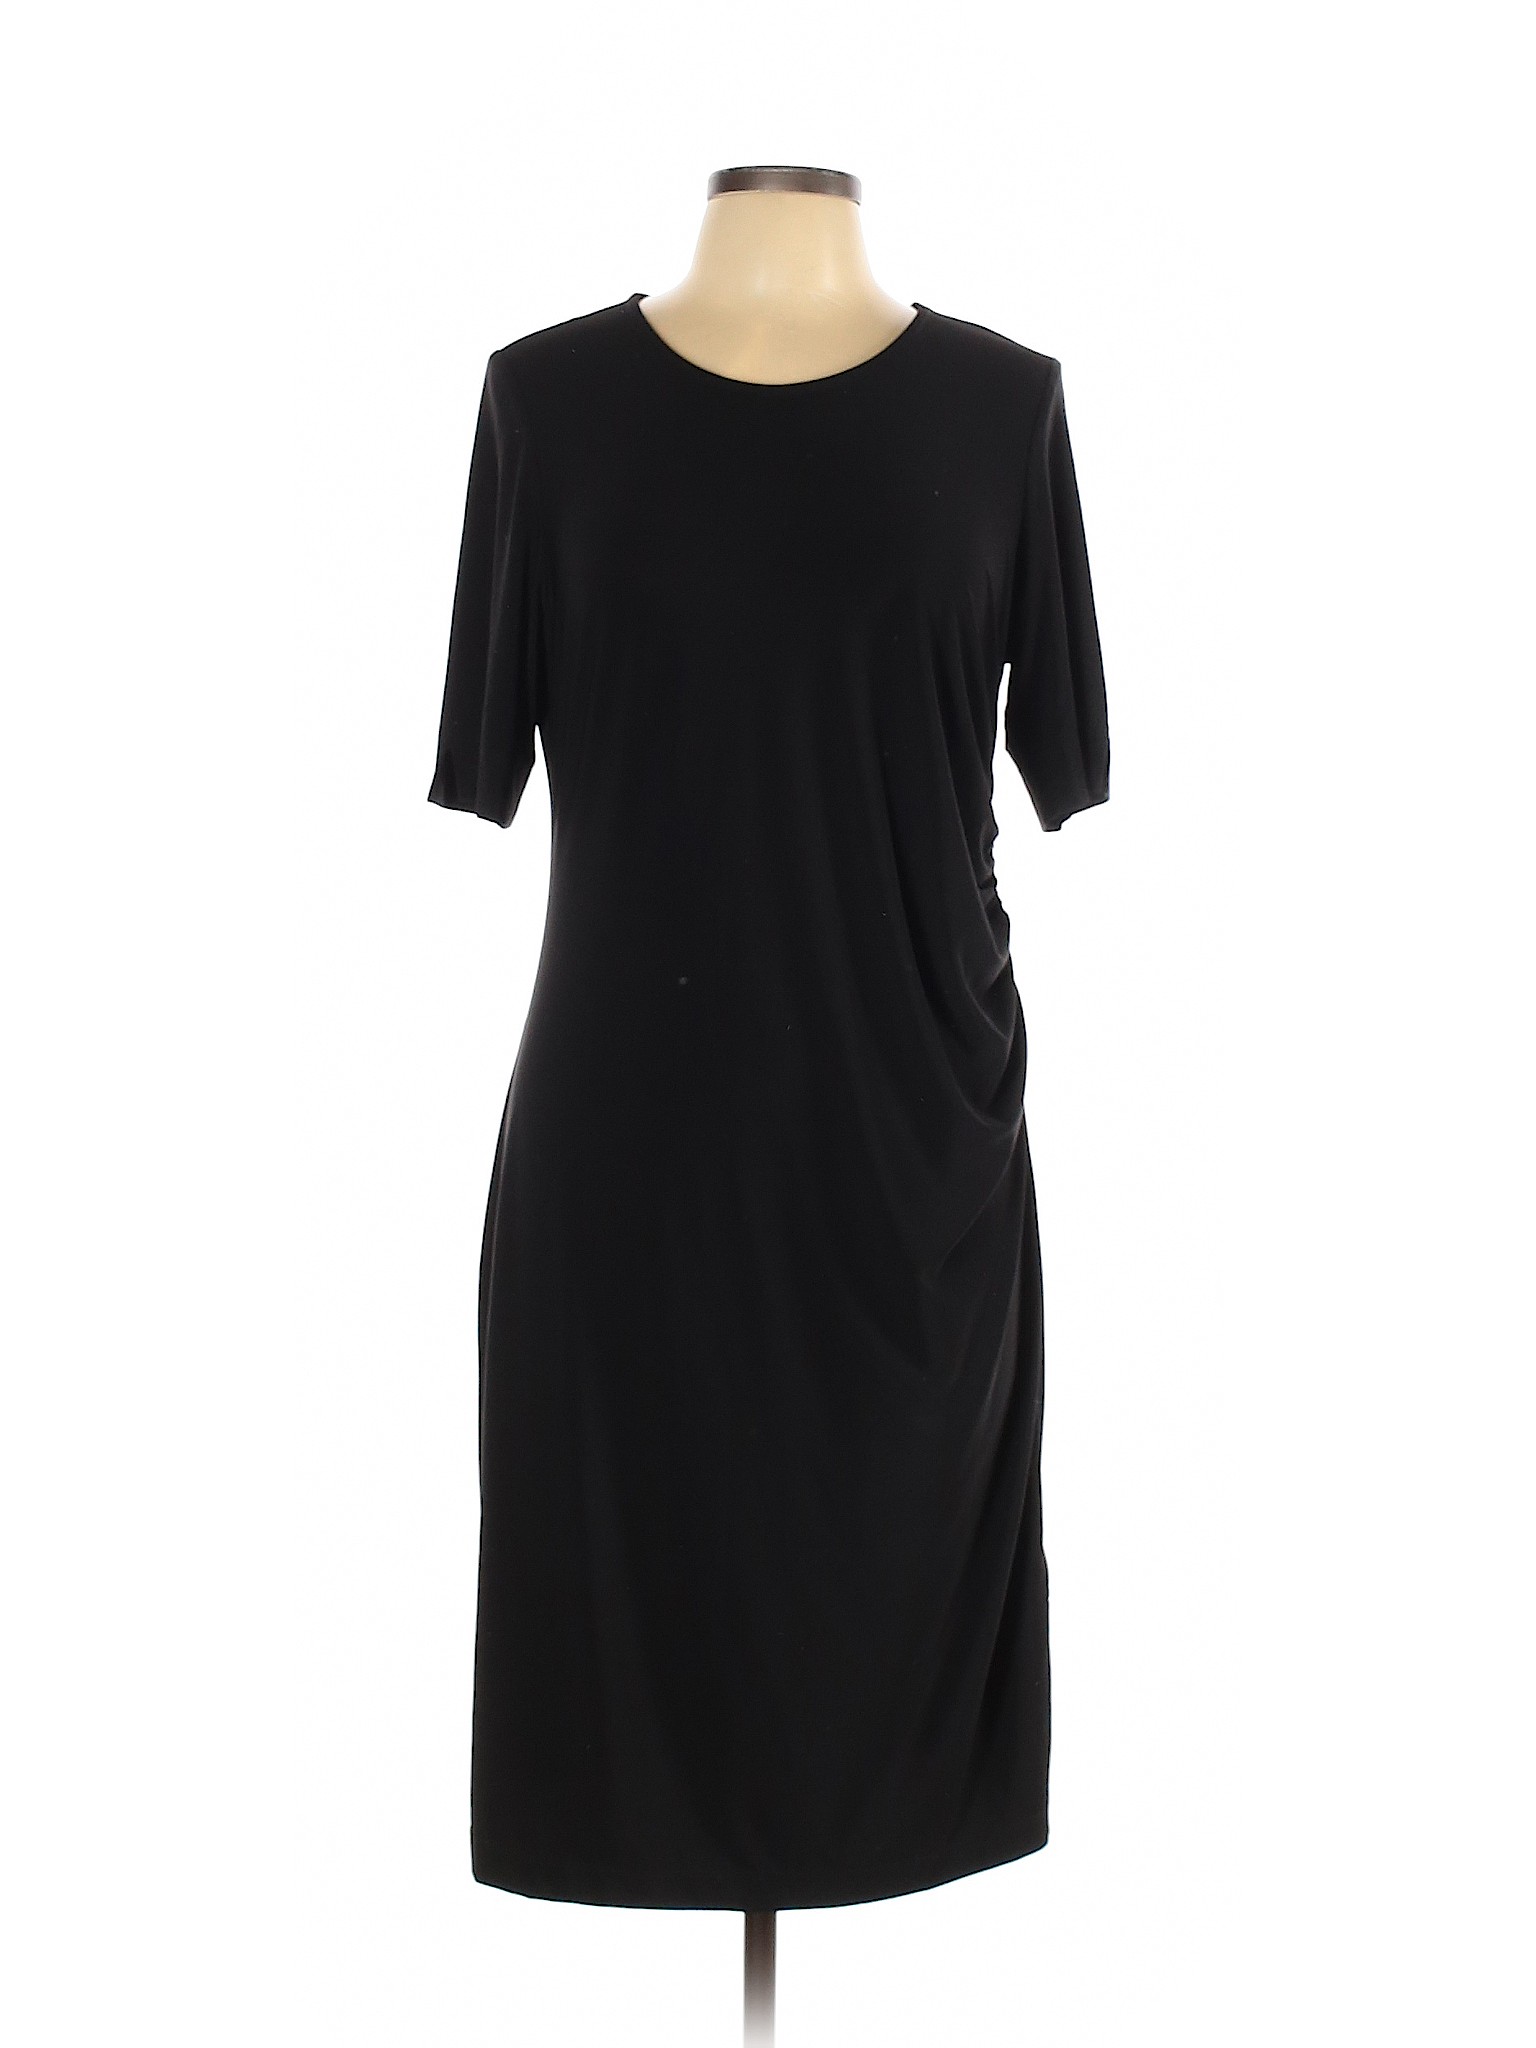 Chico's Women Black Cocktail Dress L | eBay